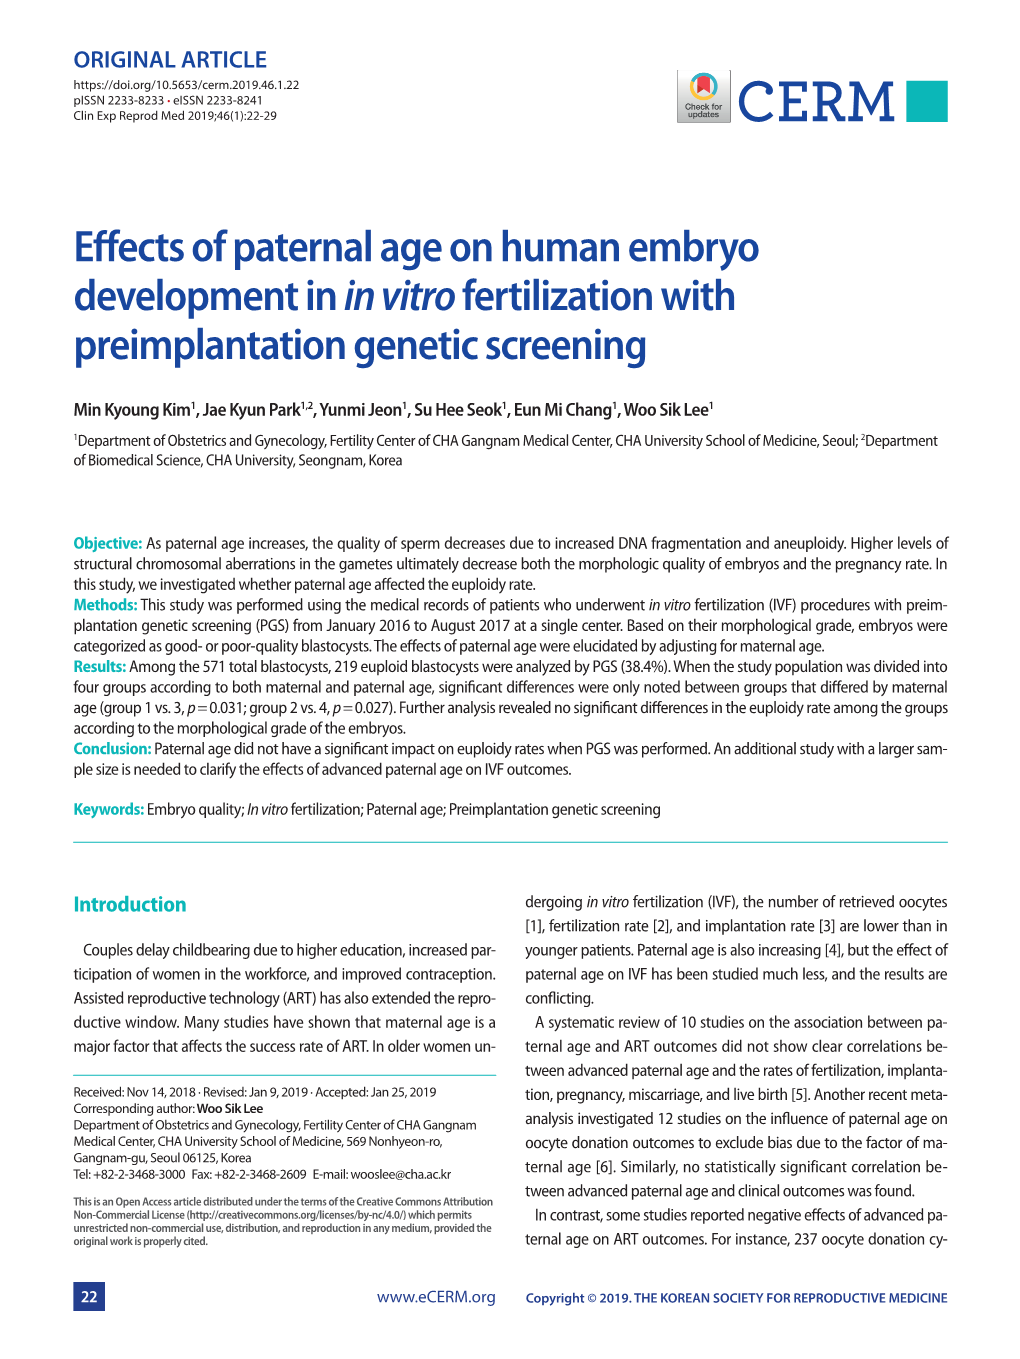 Effects of Paternal Age on Human Embryo Development in in Vitrofertilization with Preimplantation Genetic Screening